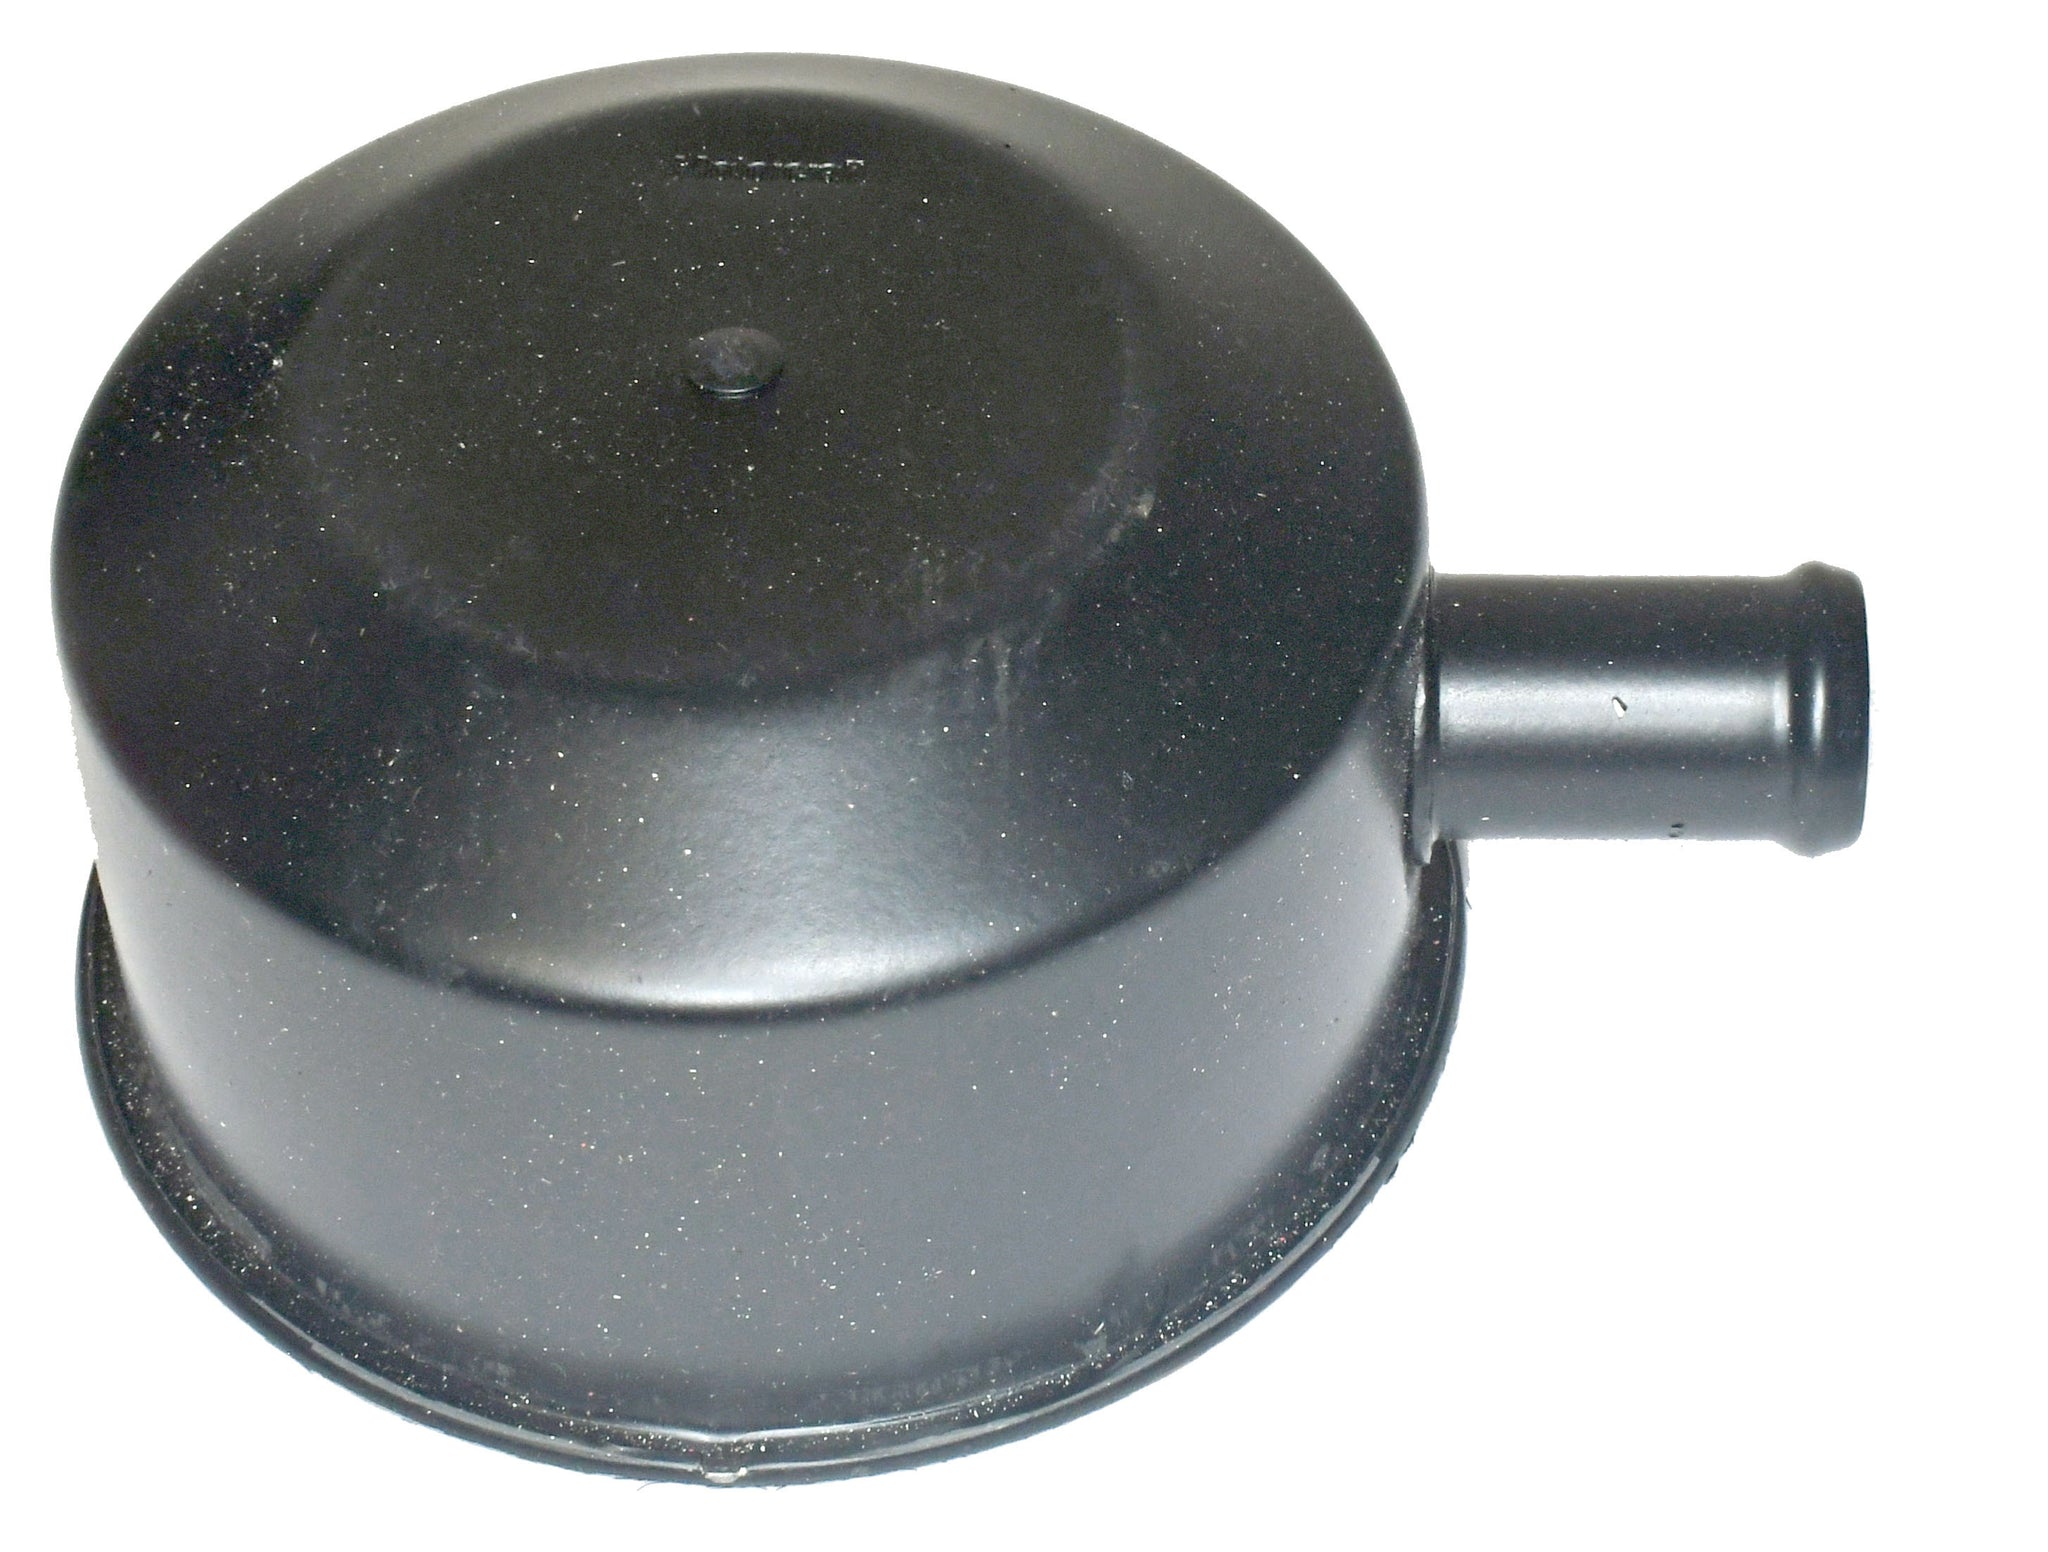 New valve cover crankcase breather cap fits many 1960-1975 cars C4TZ-6766-B